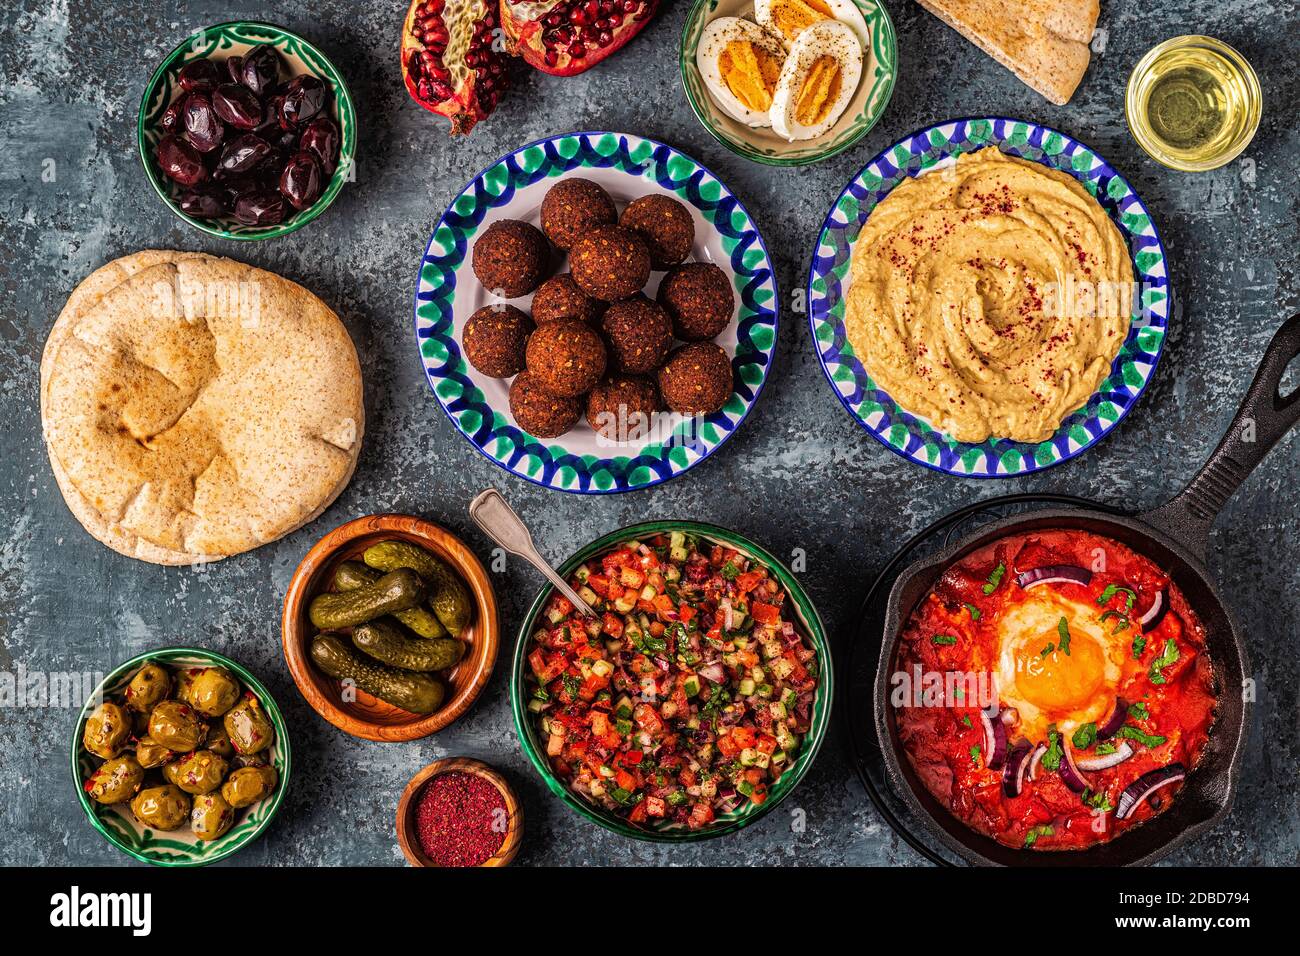 Falafel, hummus, shakshuka, Israeli salad - traditional dishes of ...